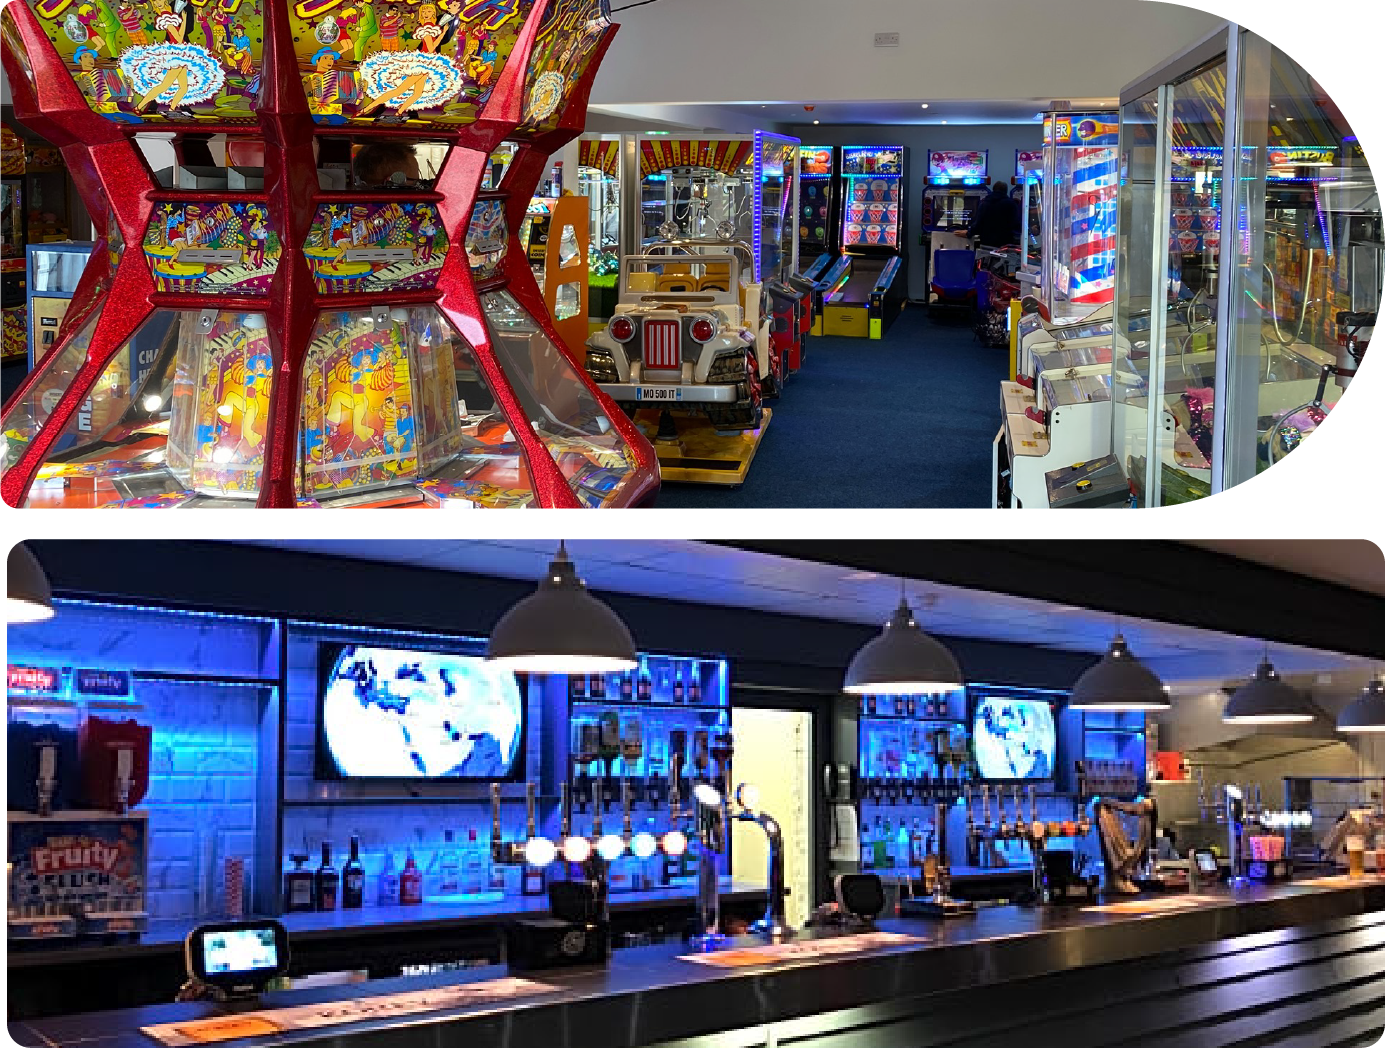 Arcades and bar